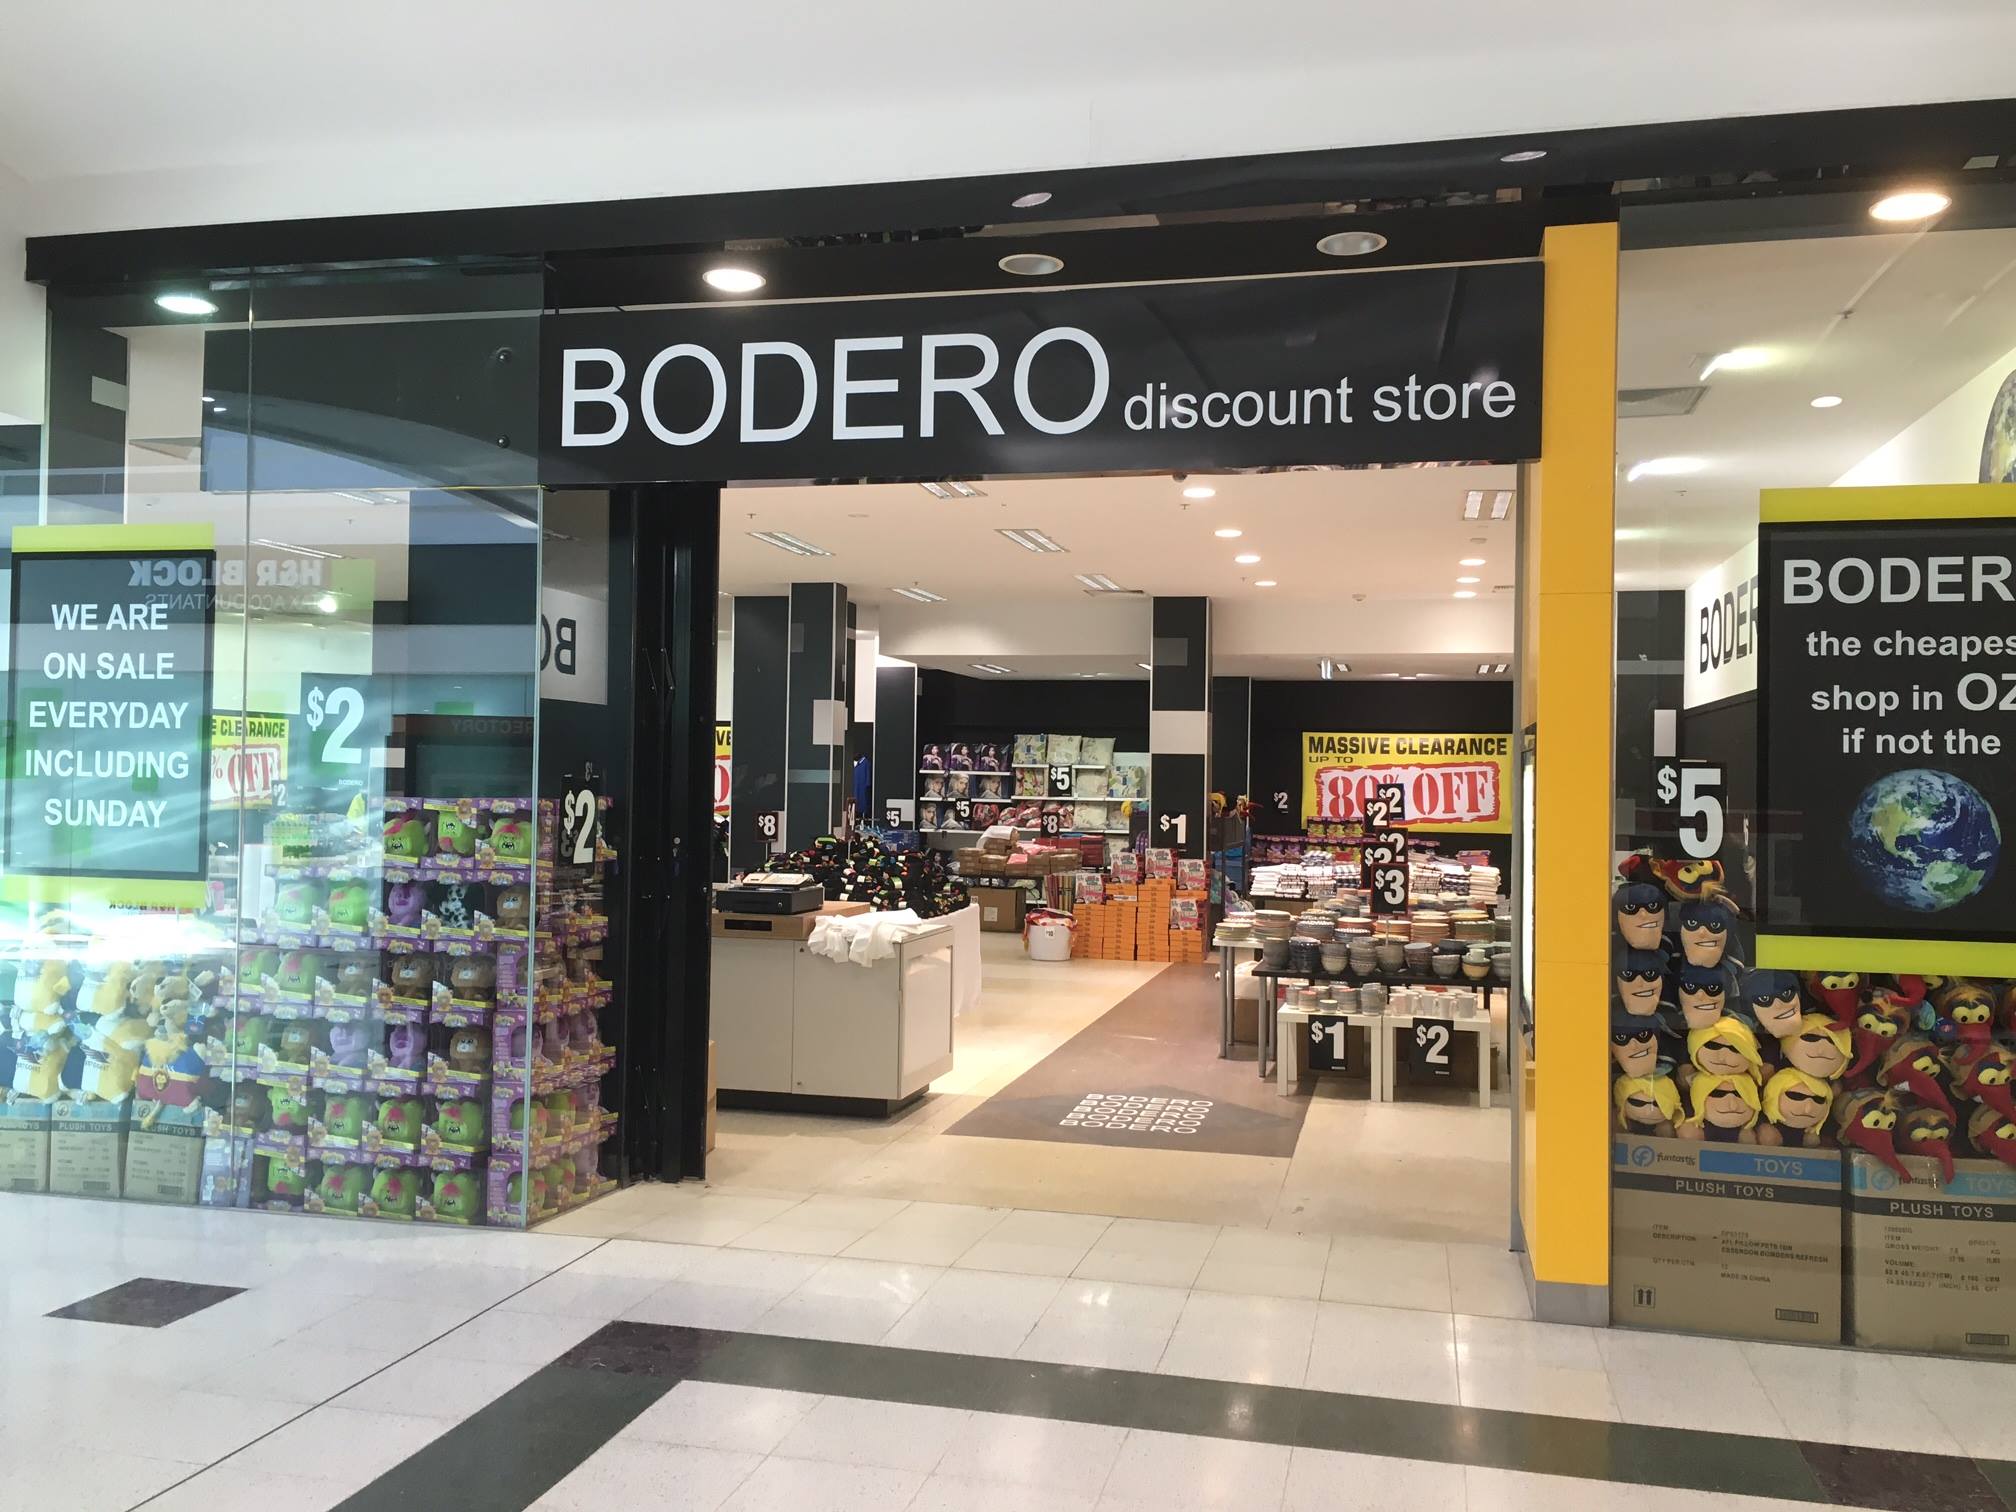 Introducing: Bodero!